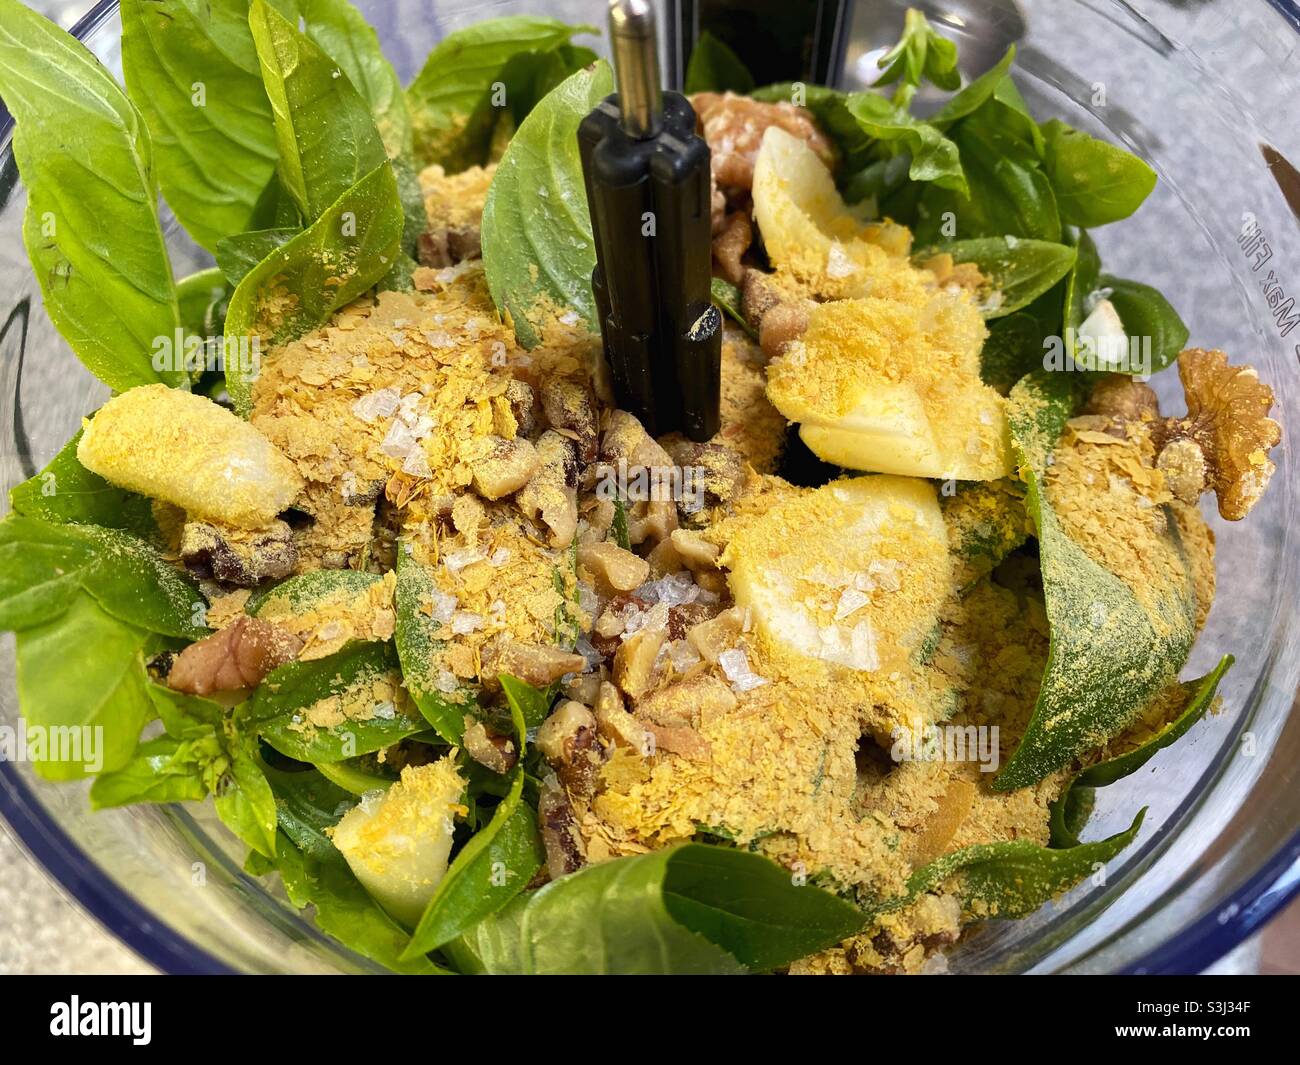 Ingredients for vegan pesto inside a food processor. Stock Photo